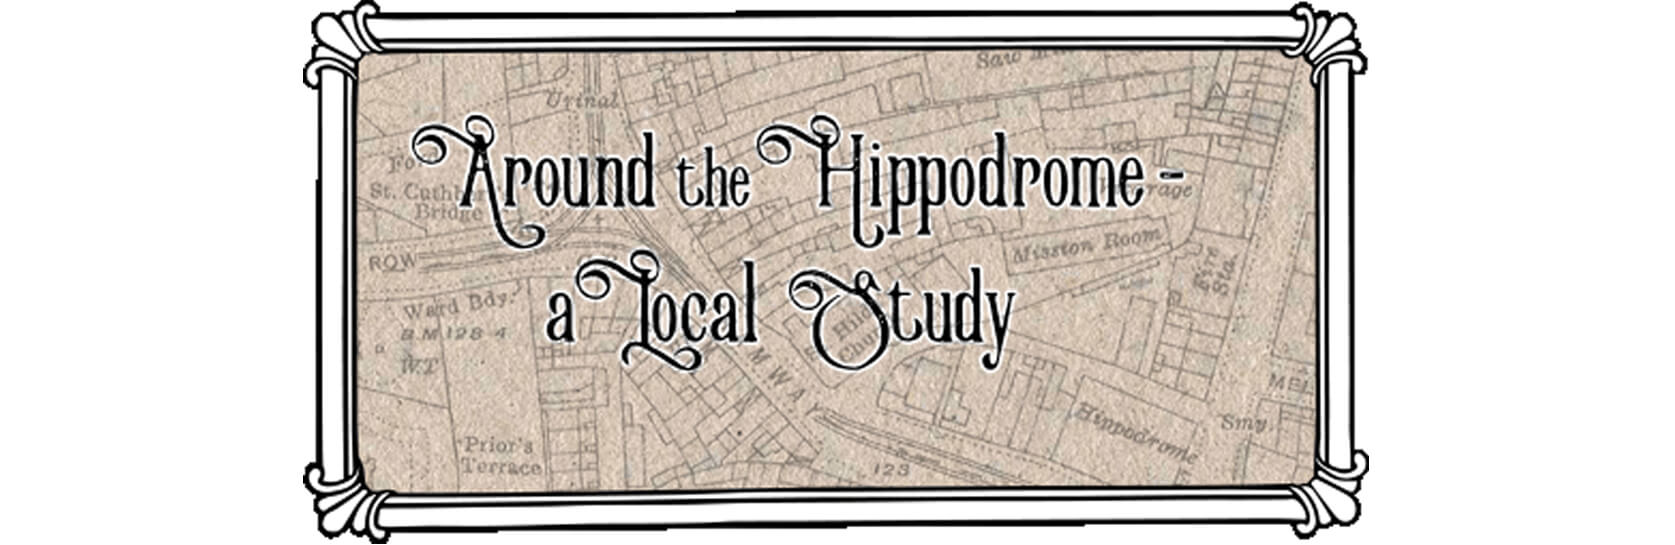 Around the Hippodrome - a Local Study